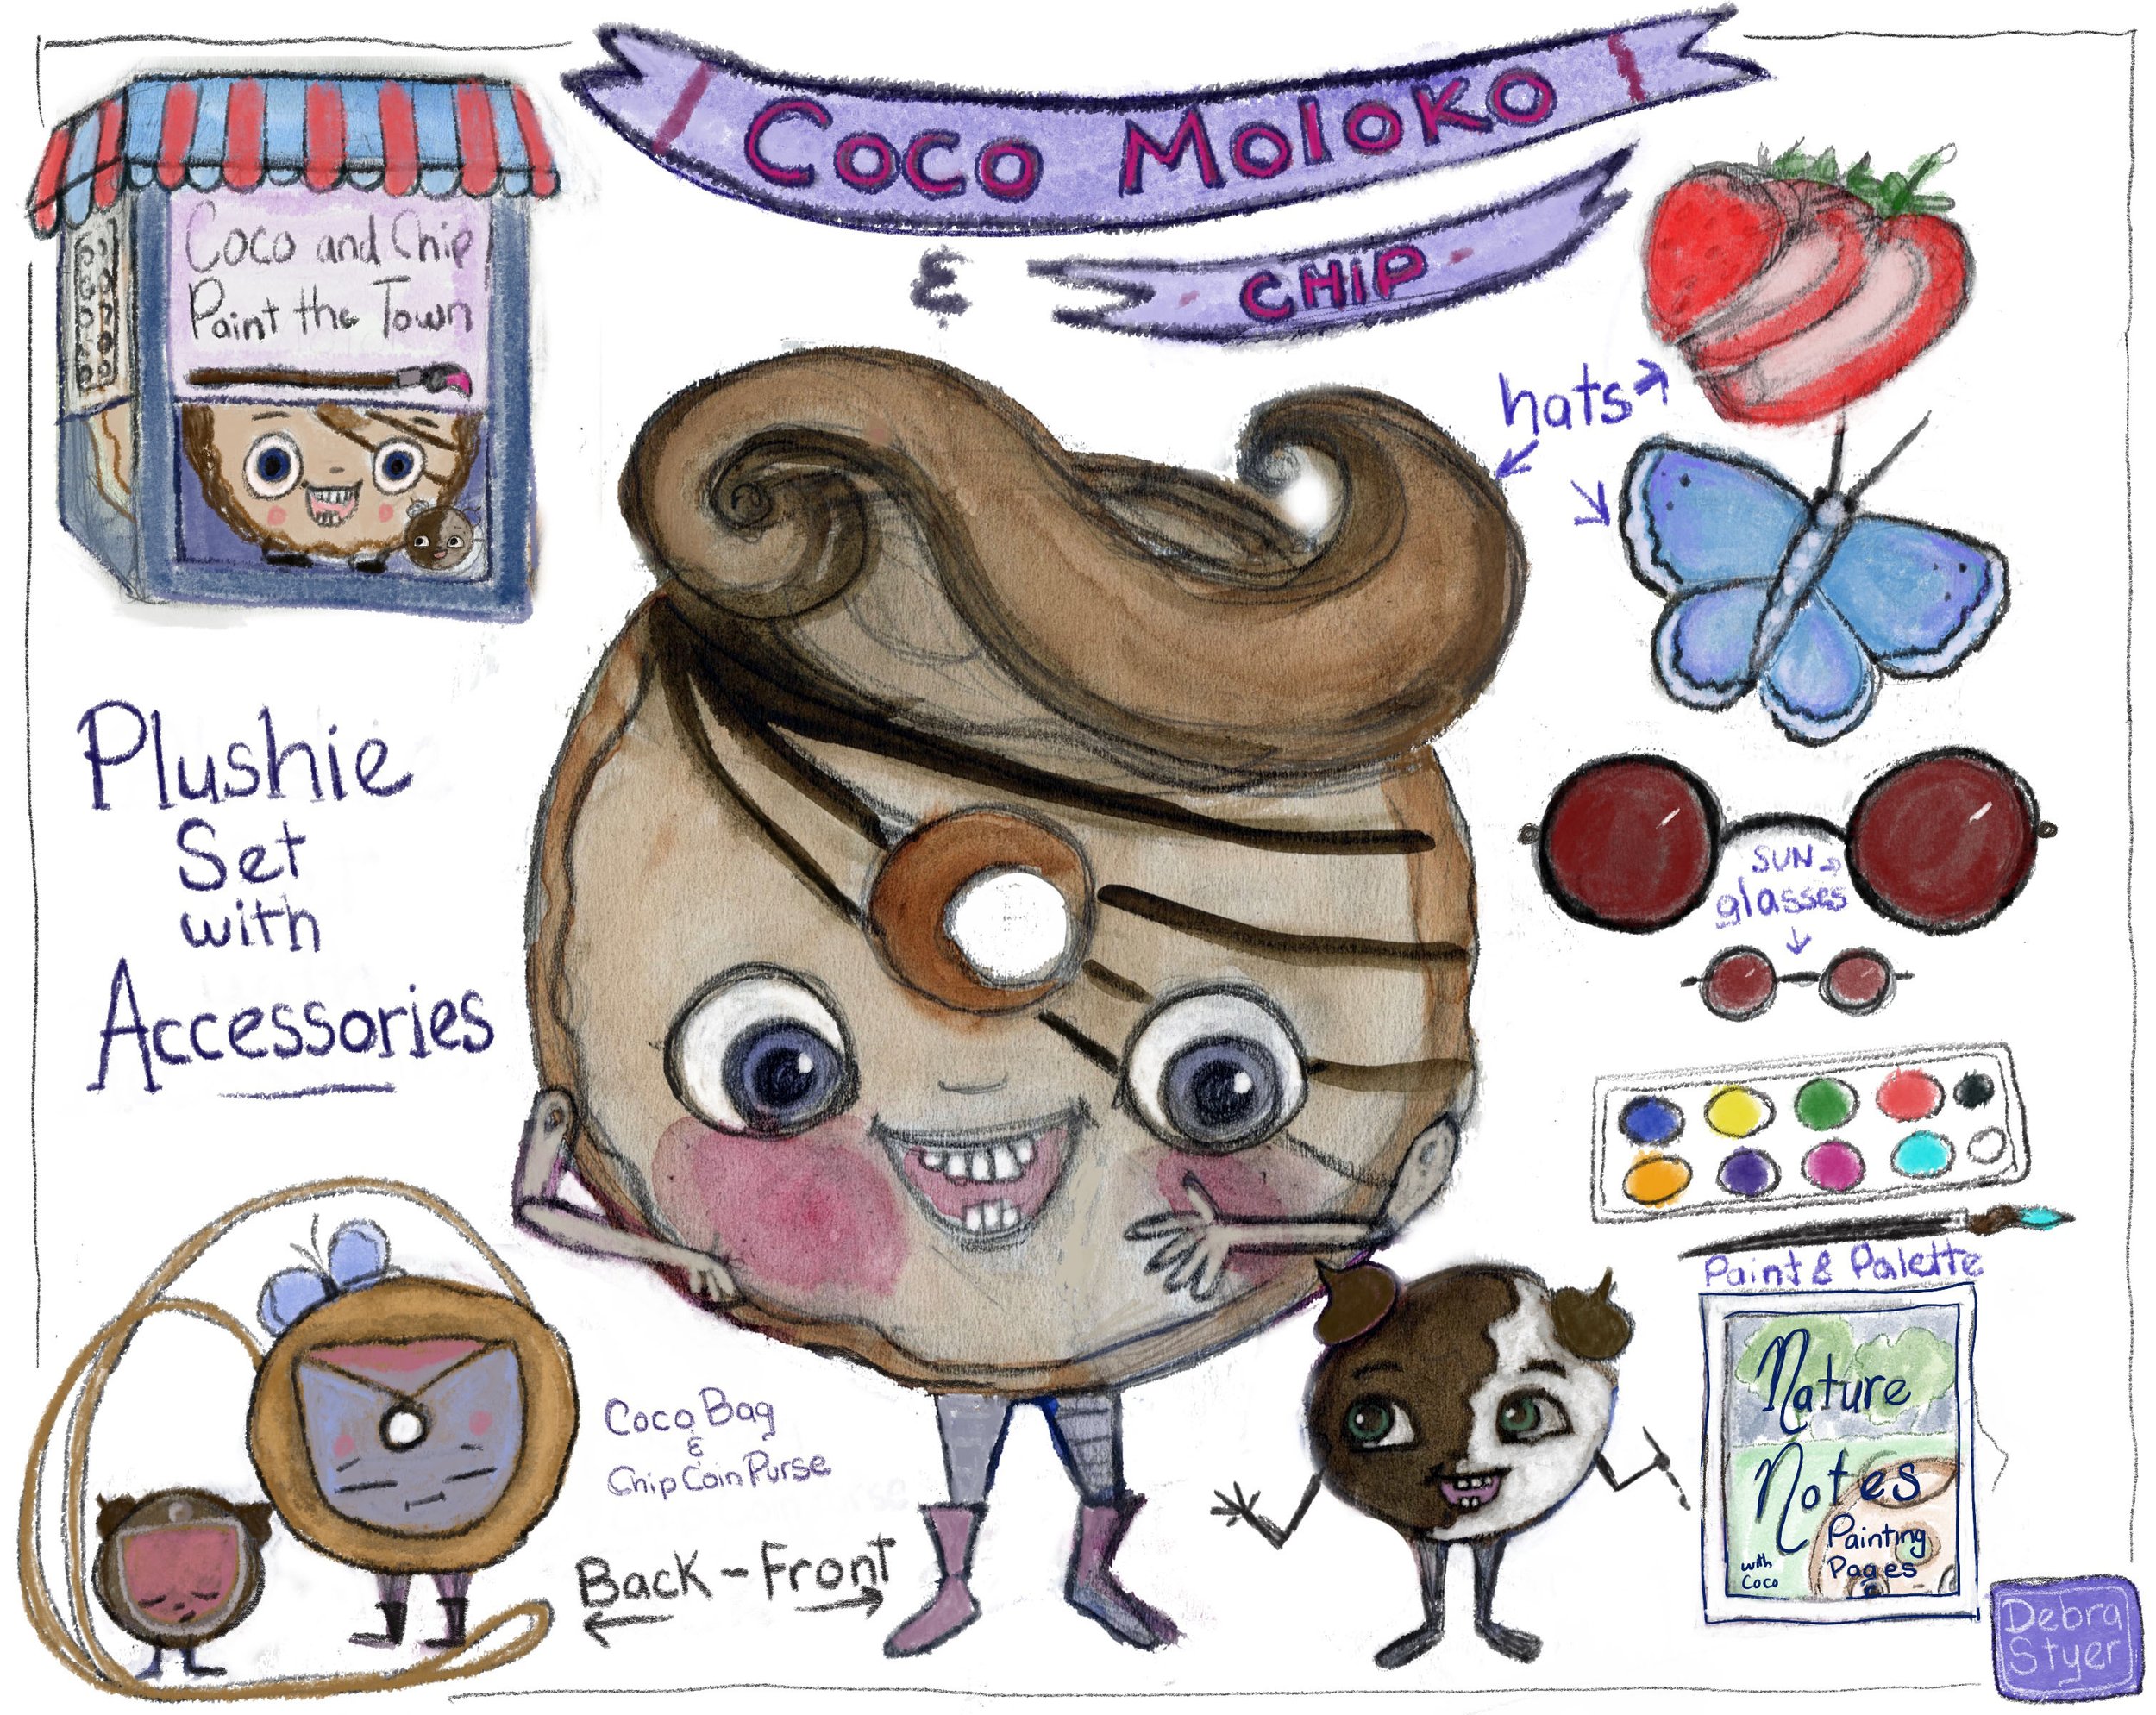 Coco Moloko Plush Toy.jpg